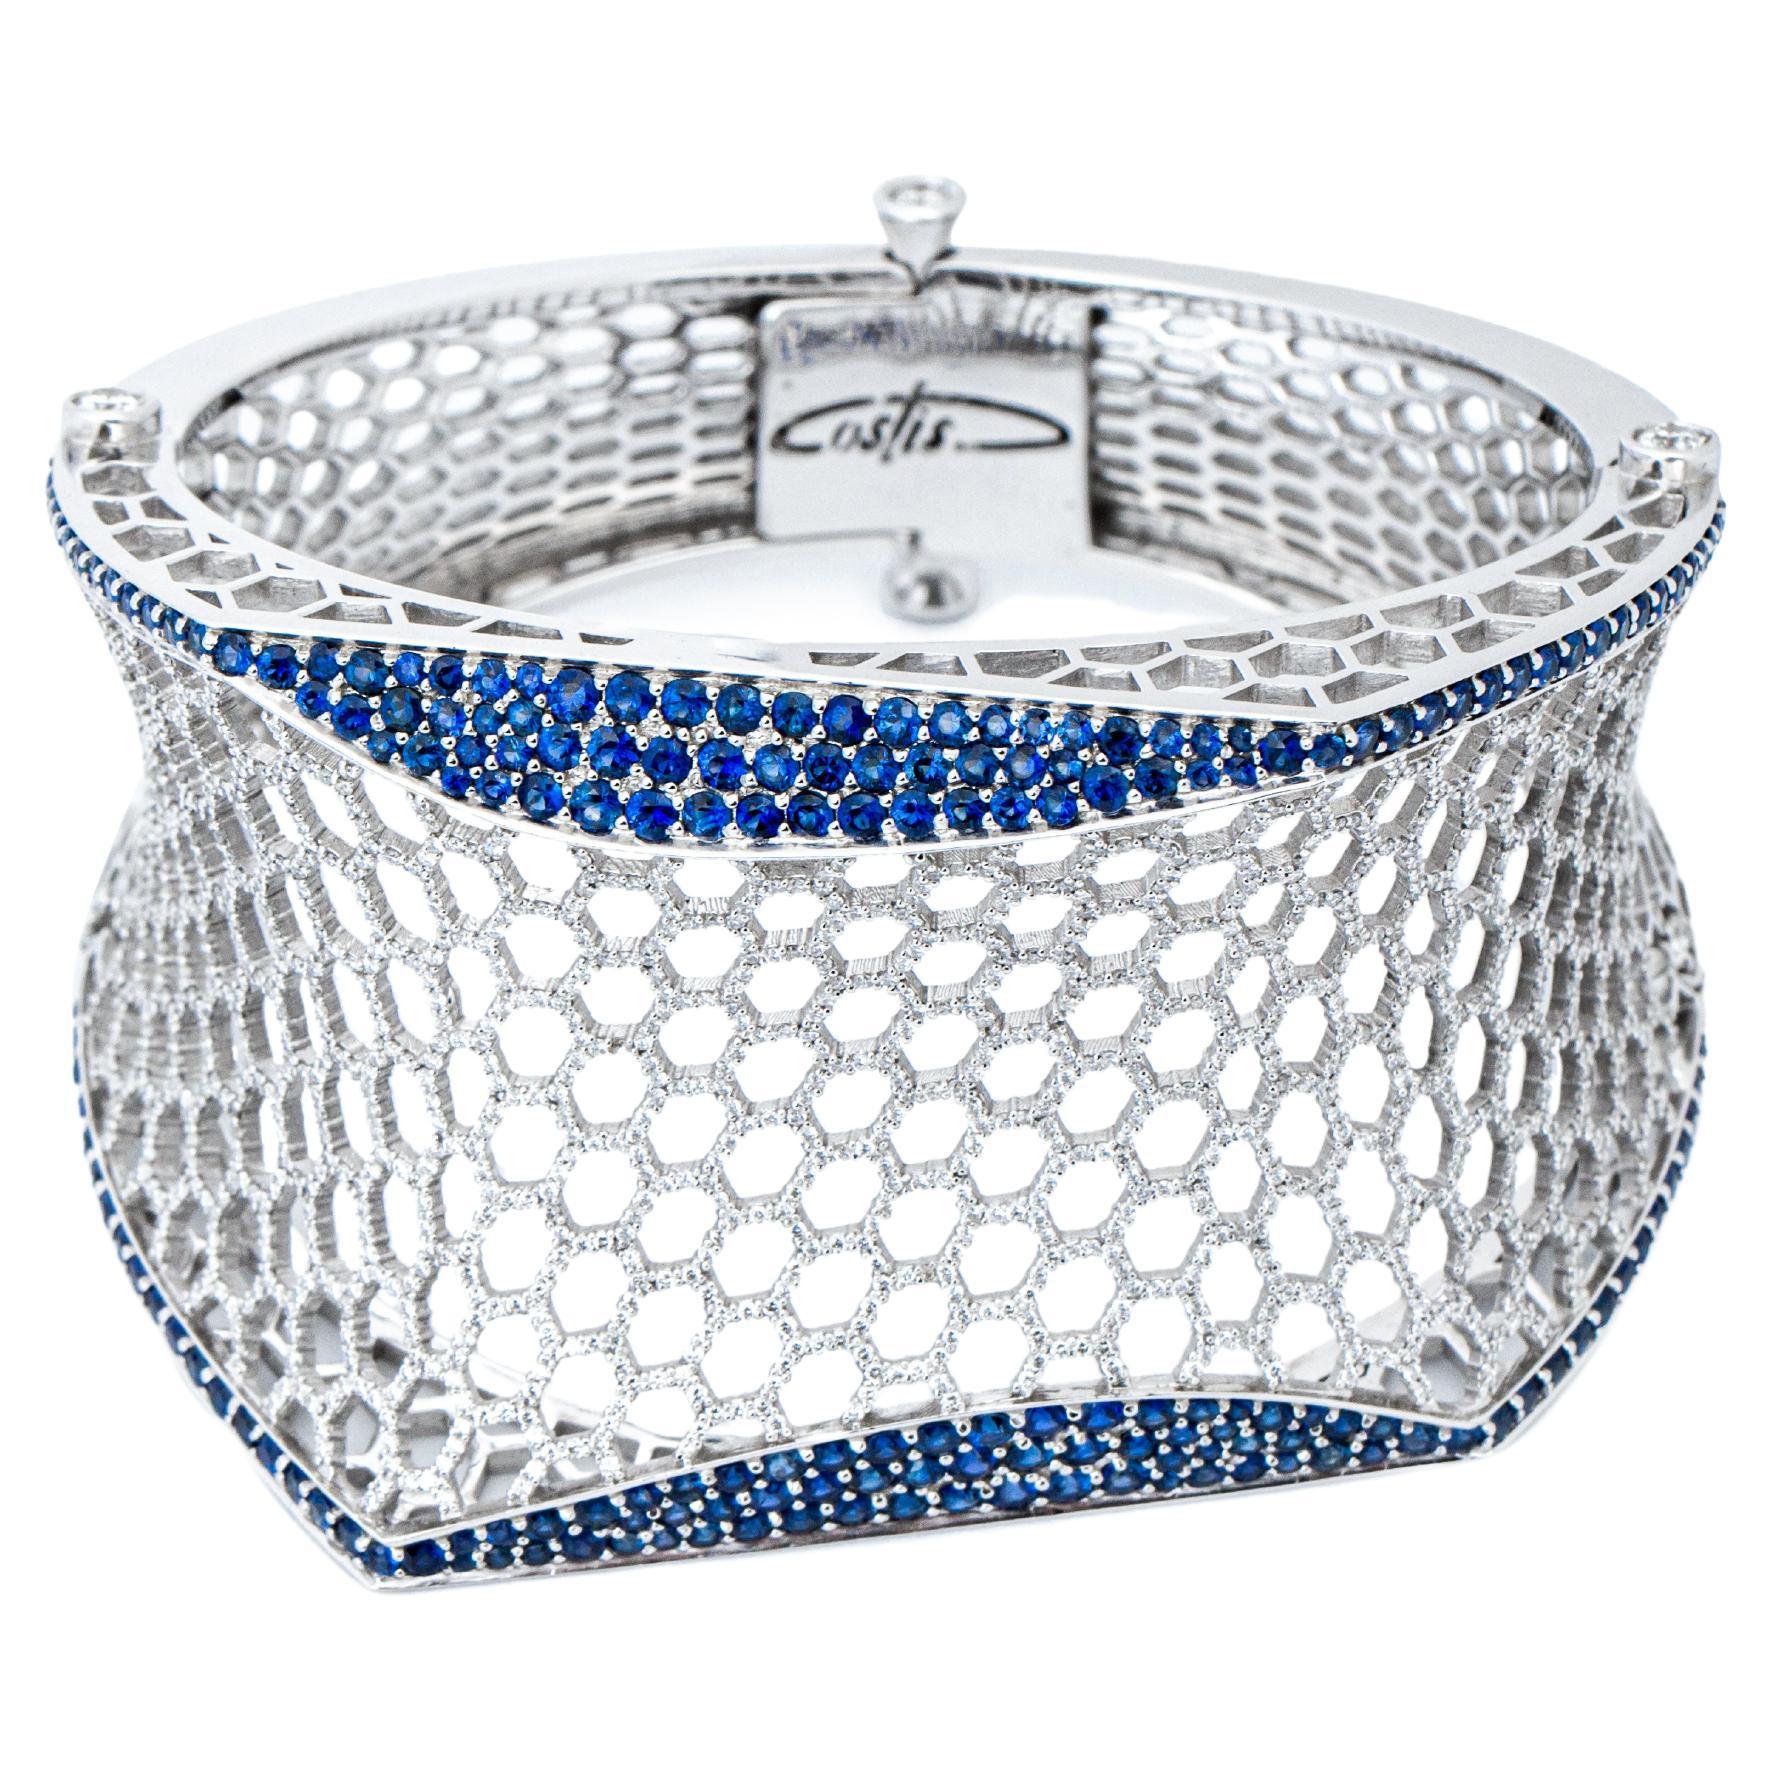 "Costis" Precious Beehive Collection Uneven Bracelet Pave' - Diamonds, Sapphires For Sale